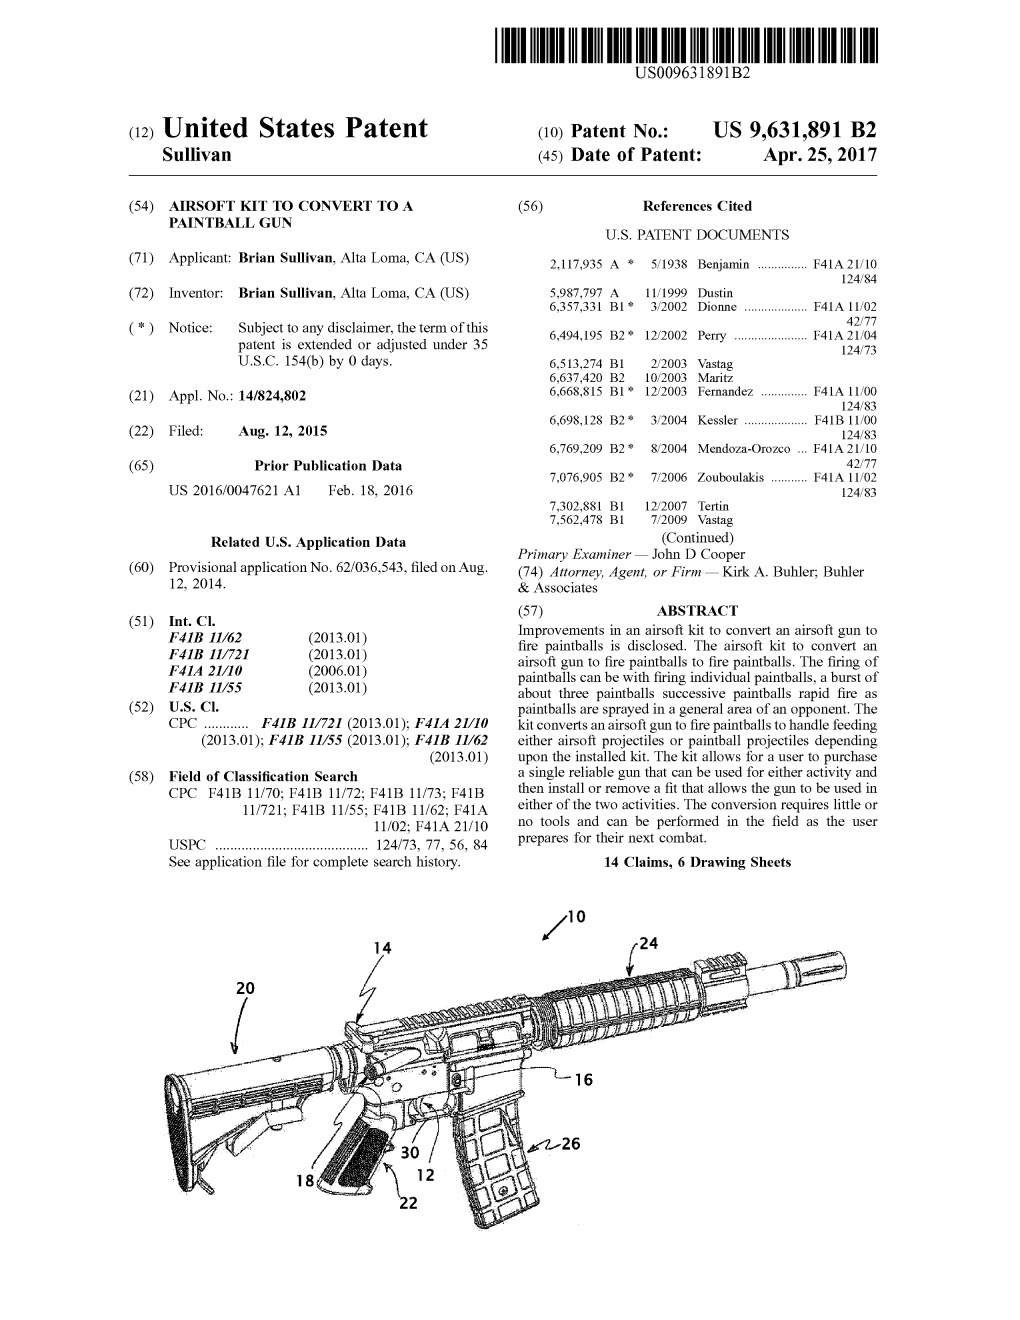 (12) United States Patent (10) Patent No.: US 9,631,891 B2 Sullivan (45) Date of Patent: Apr